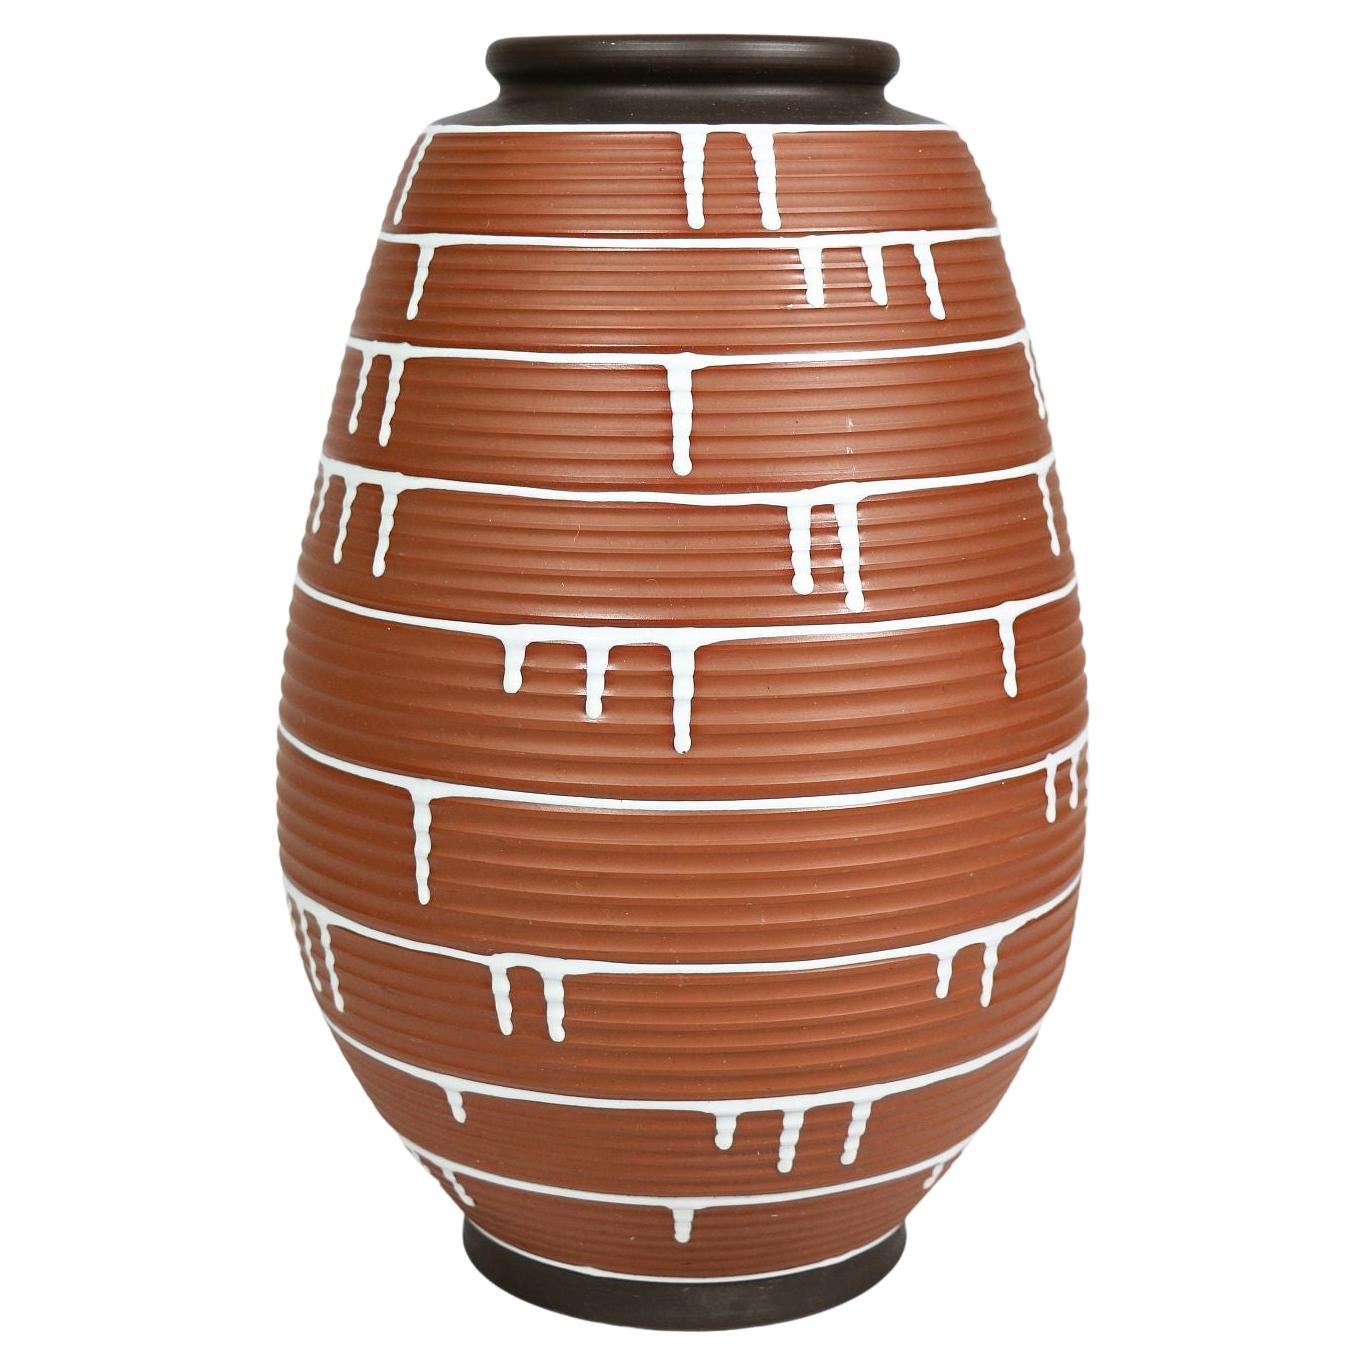 Big Vase by Ilkra Germany, pottery, model Palermo